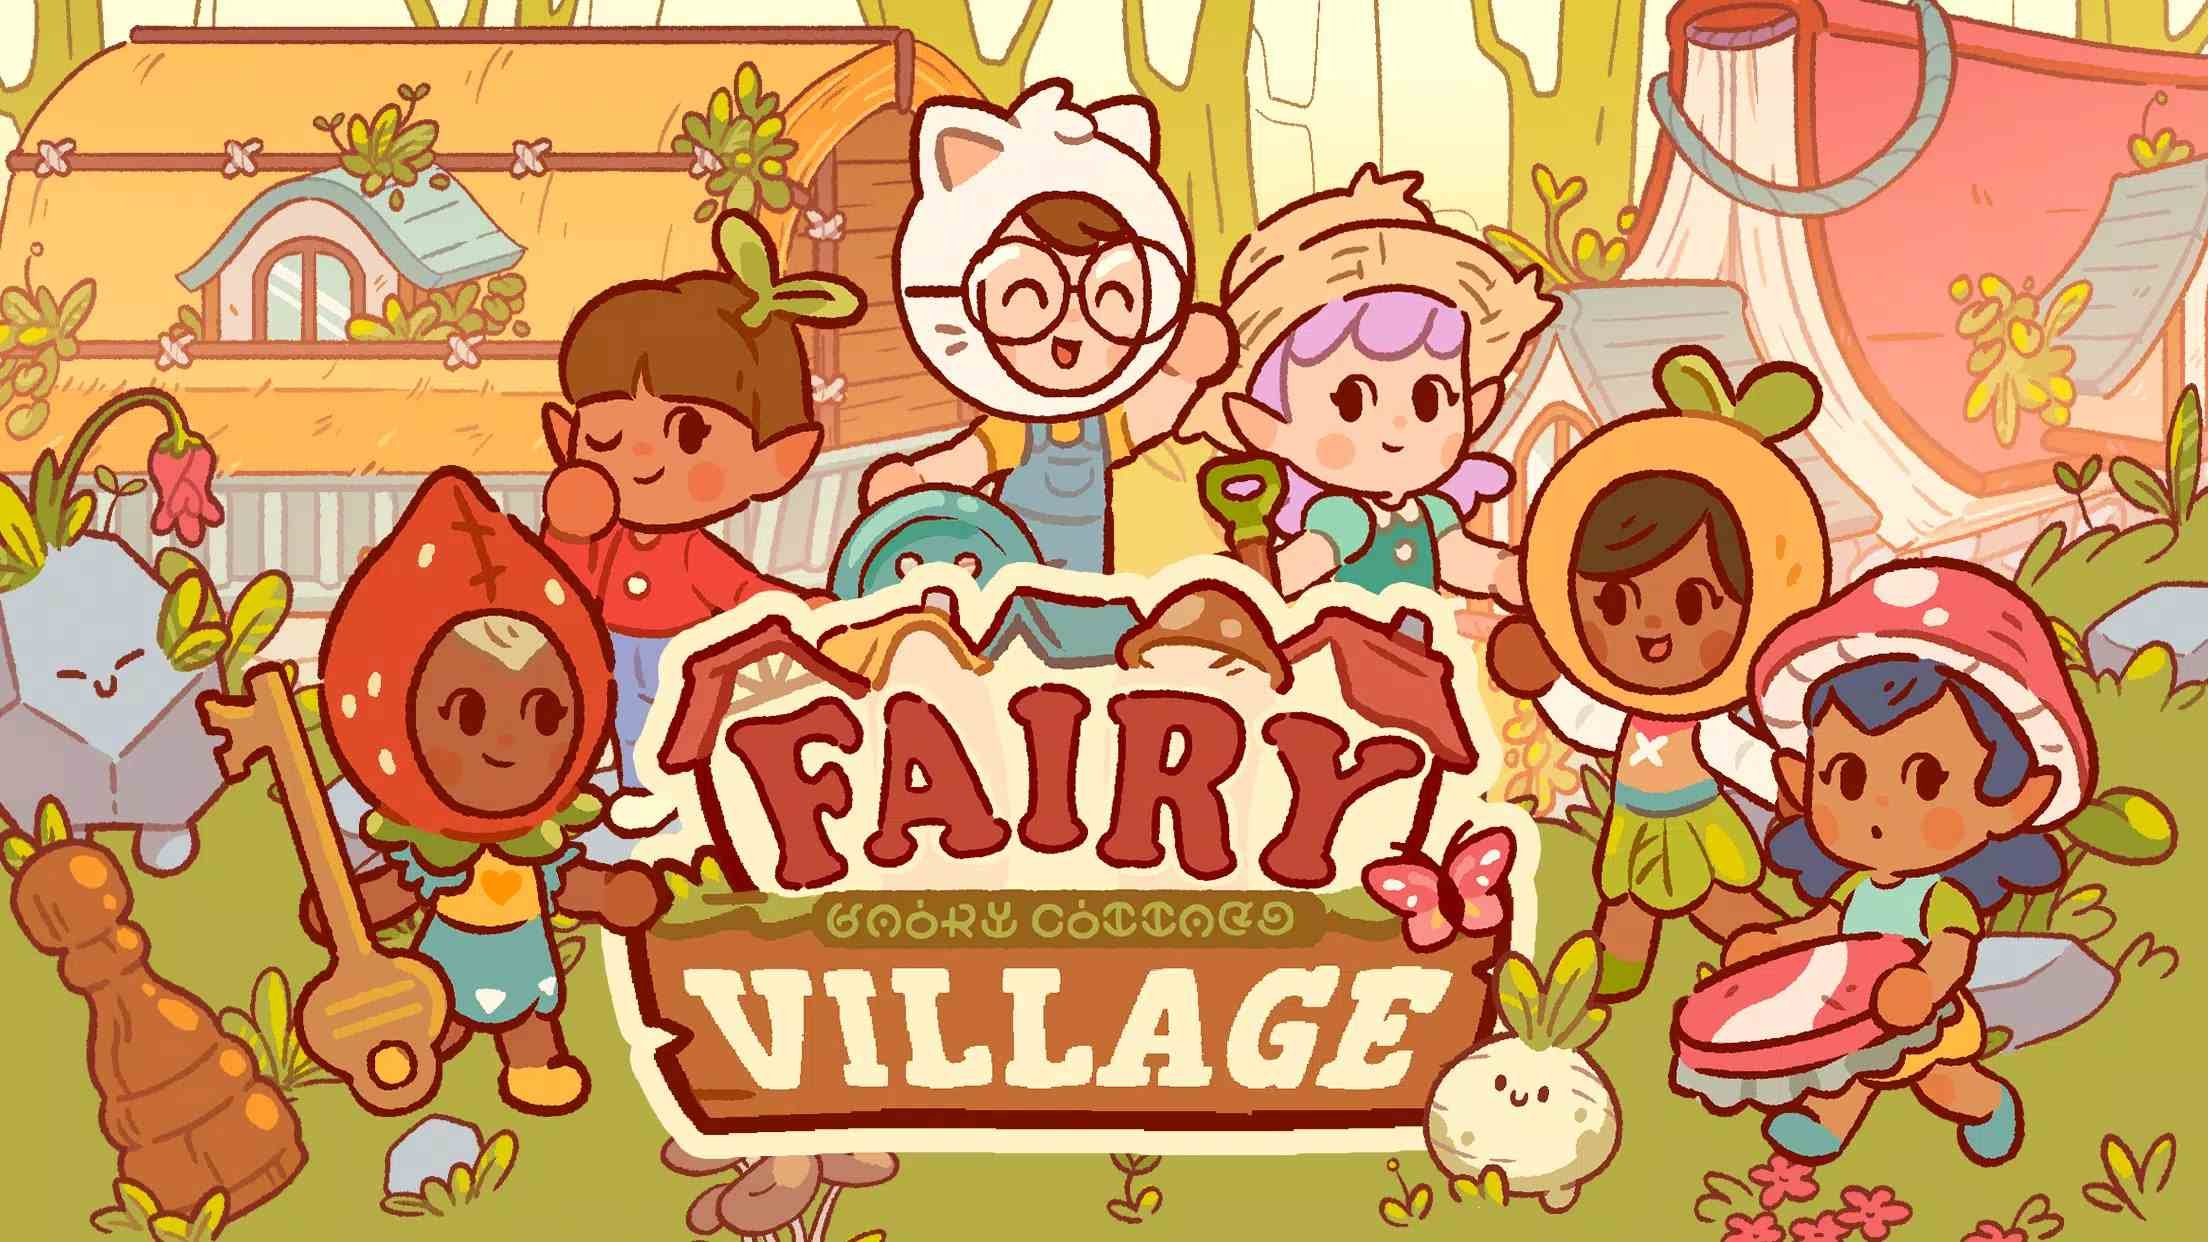 Village Fair. Fairy village